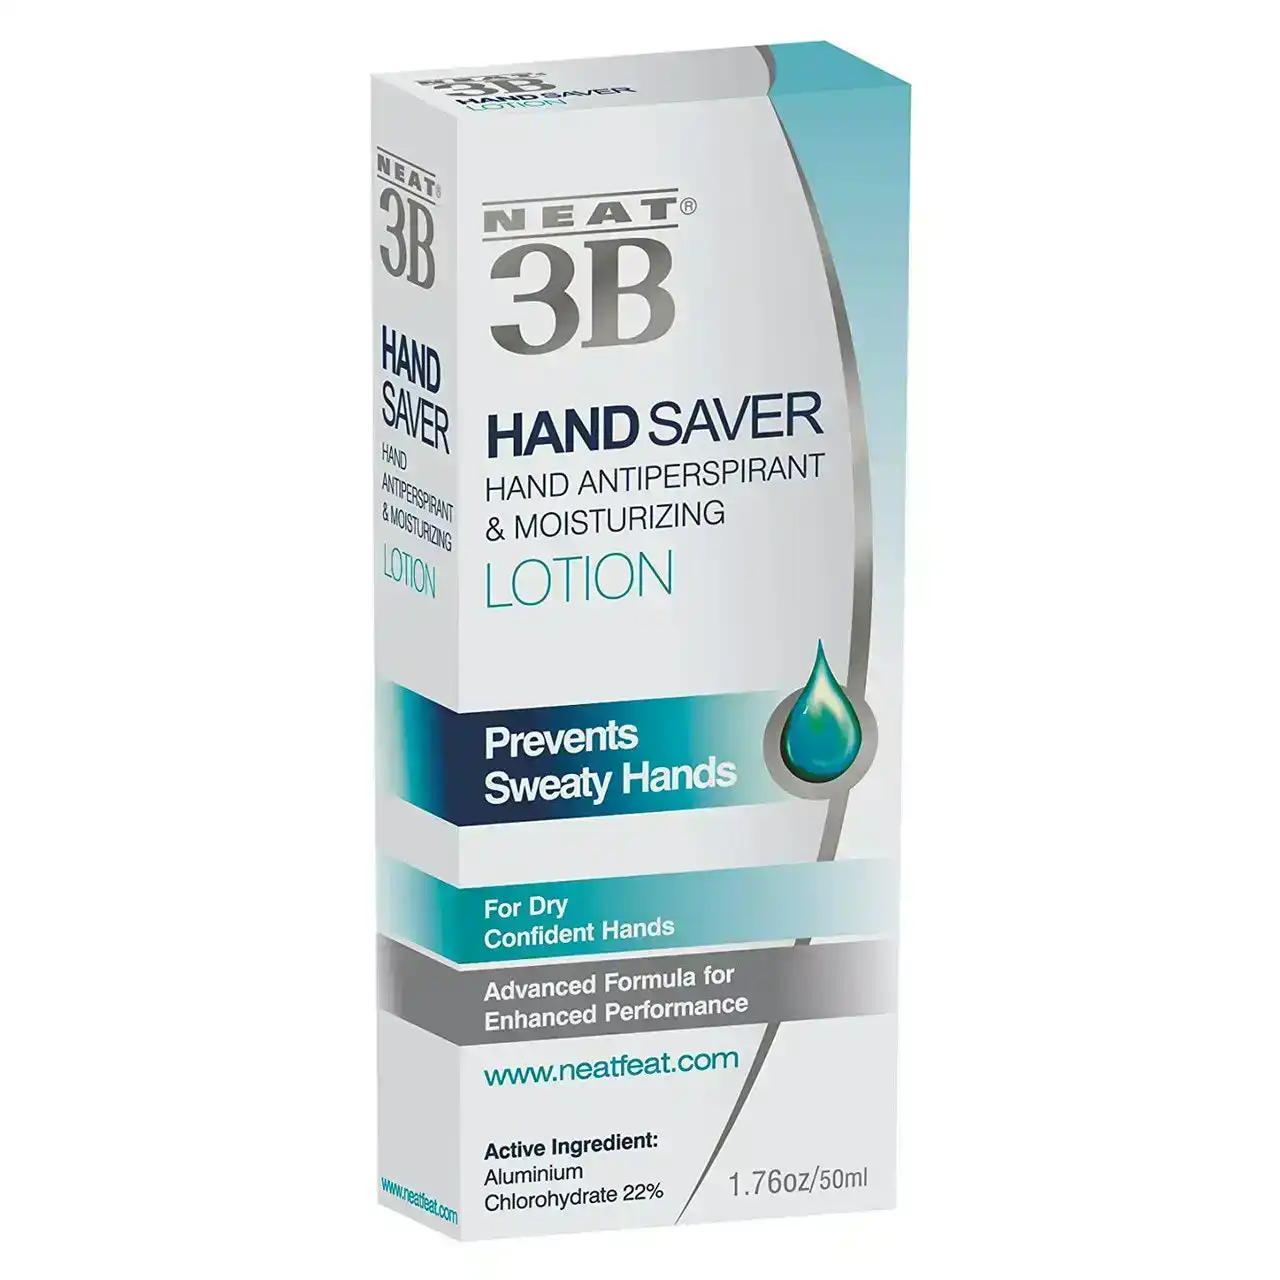 NEAT 3B Hand Saver Lotion 50ml